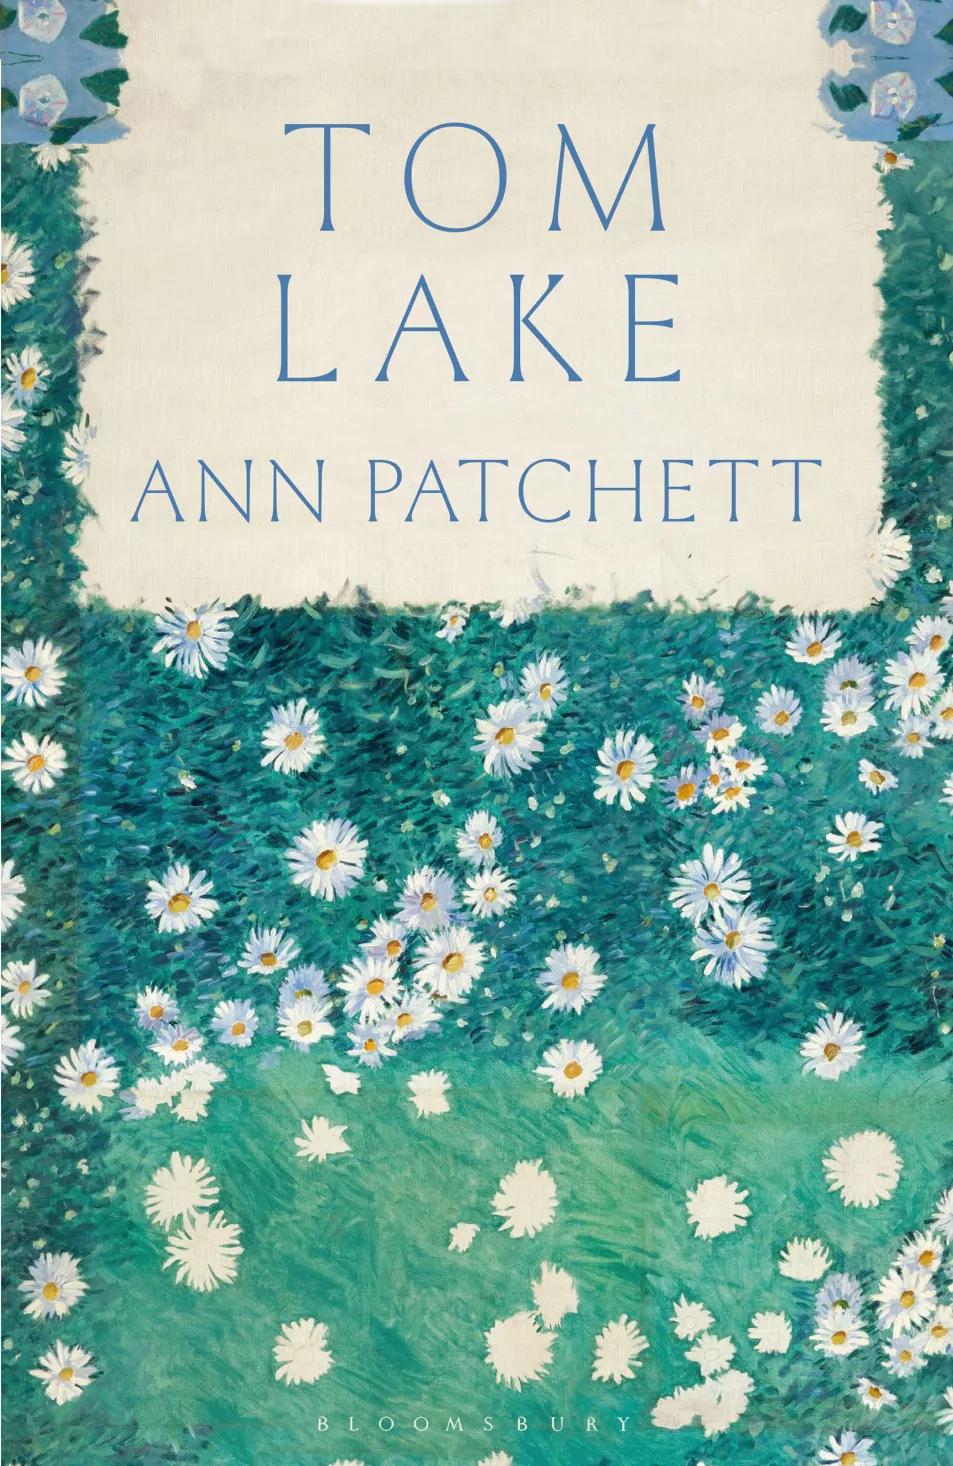 Tom Lake by Ann Patchett (Bloomsbury/PA)